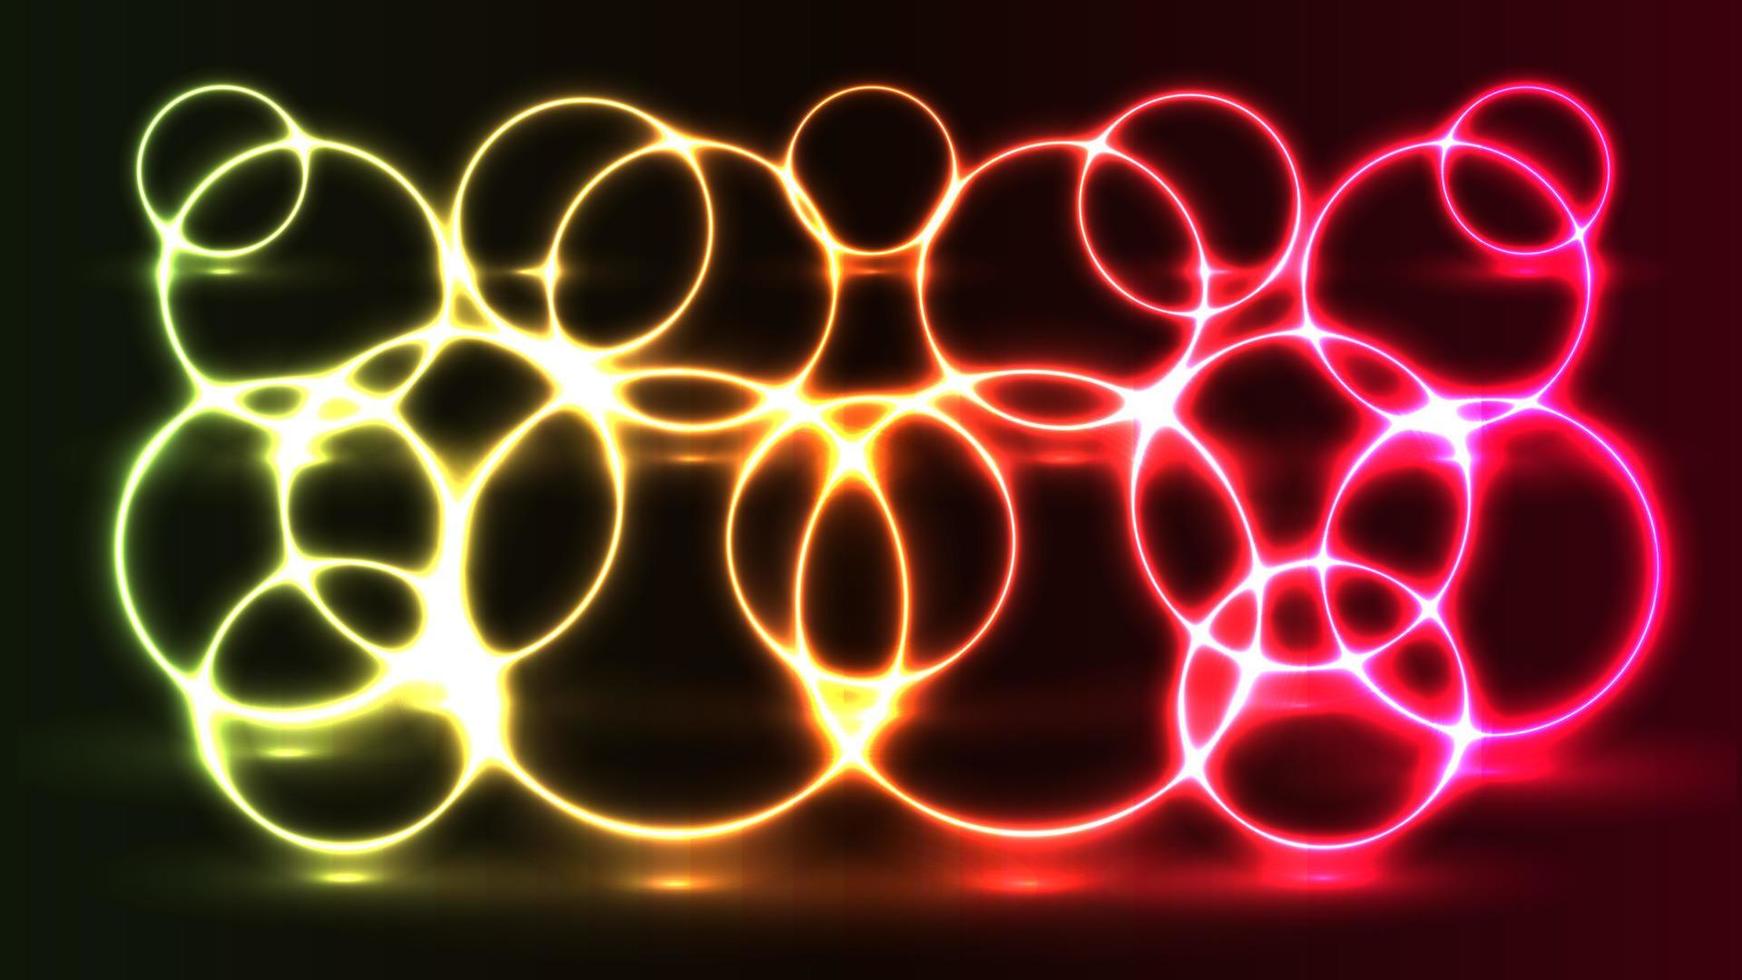 Neon circles glowing on dark background vector